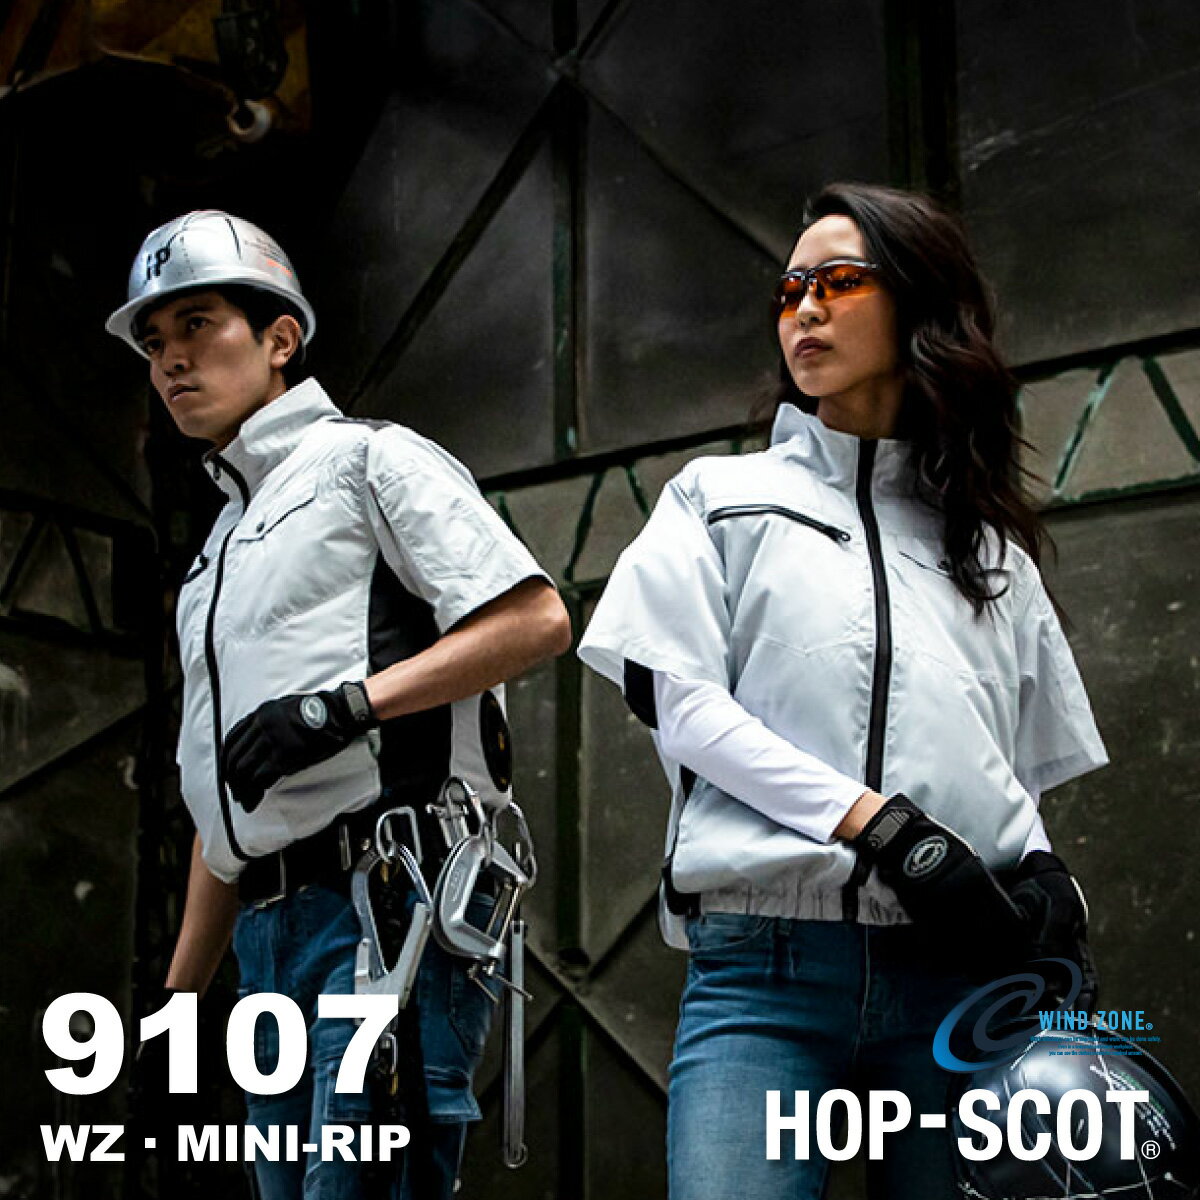 WINDZONE(HOP-SCOT) 9107 WZ ミニリップ 半袖ジャケット 中国産業 作業着 ホップスコット 半袖 現場作業 レディース対応 ワークウェア(※こちらは服単品です)